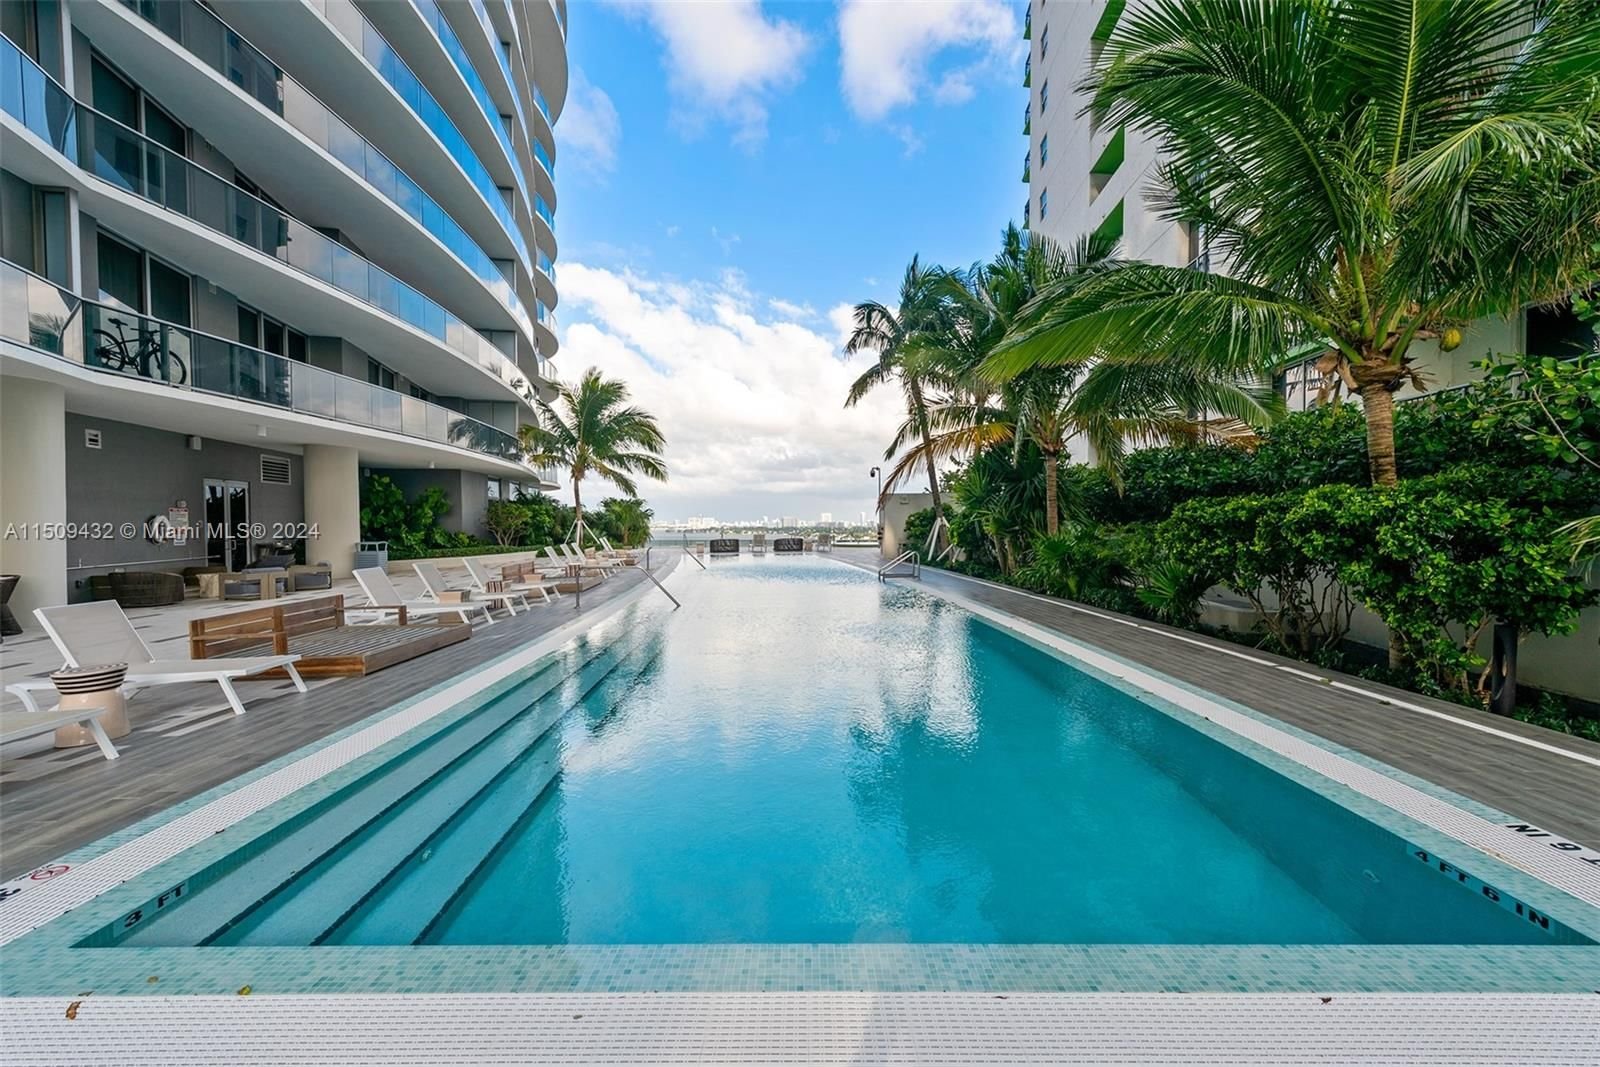 Real estate property located at 488 18th St #4703, Miami-Dade County, ARIA ON THE BAY CONDO, Miami, FL